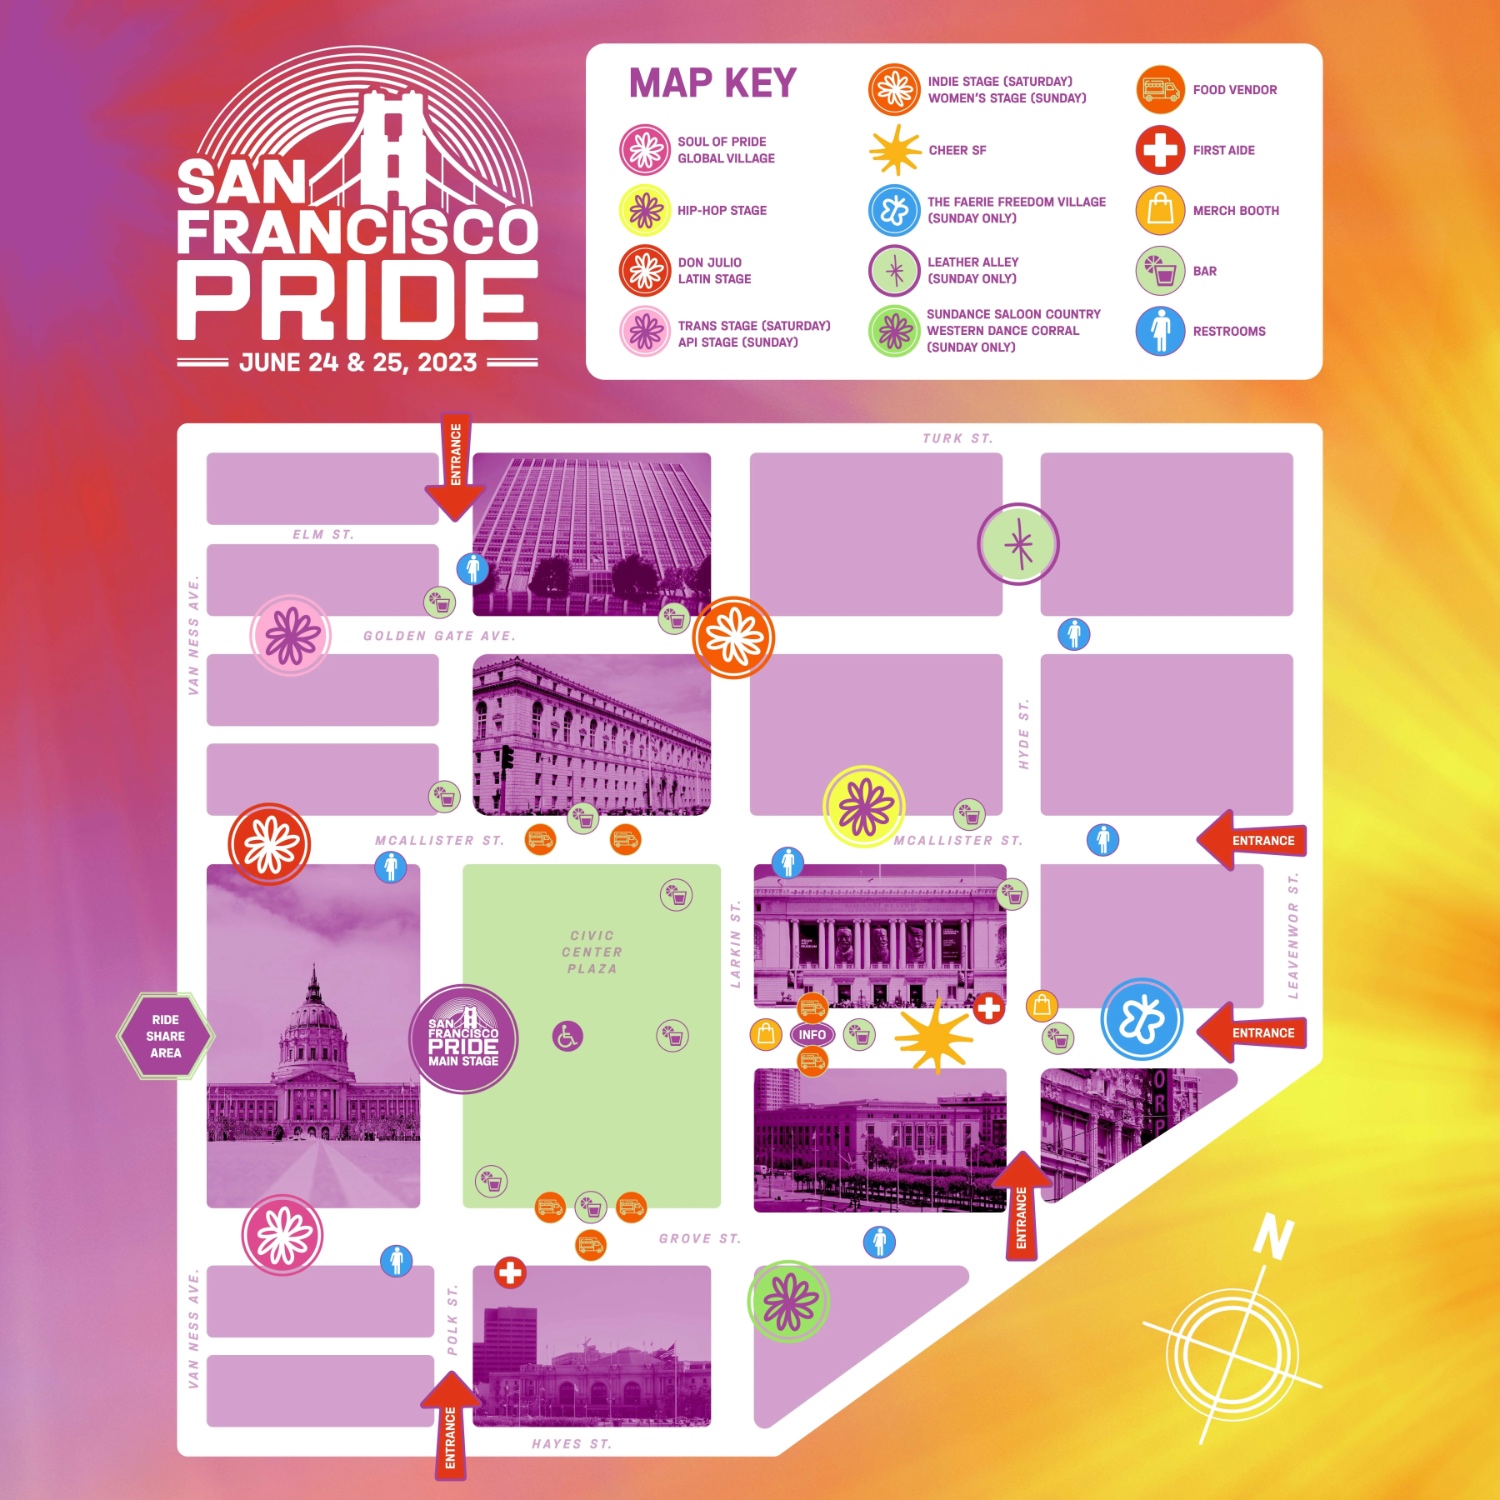 San Francisco Pride Parade and Celebration 2023 at Civic Center Plaza